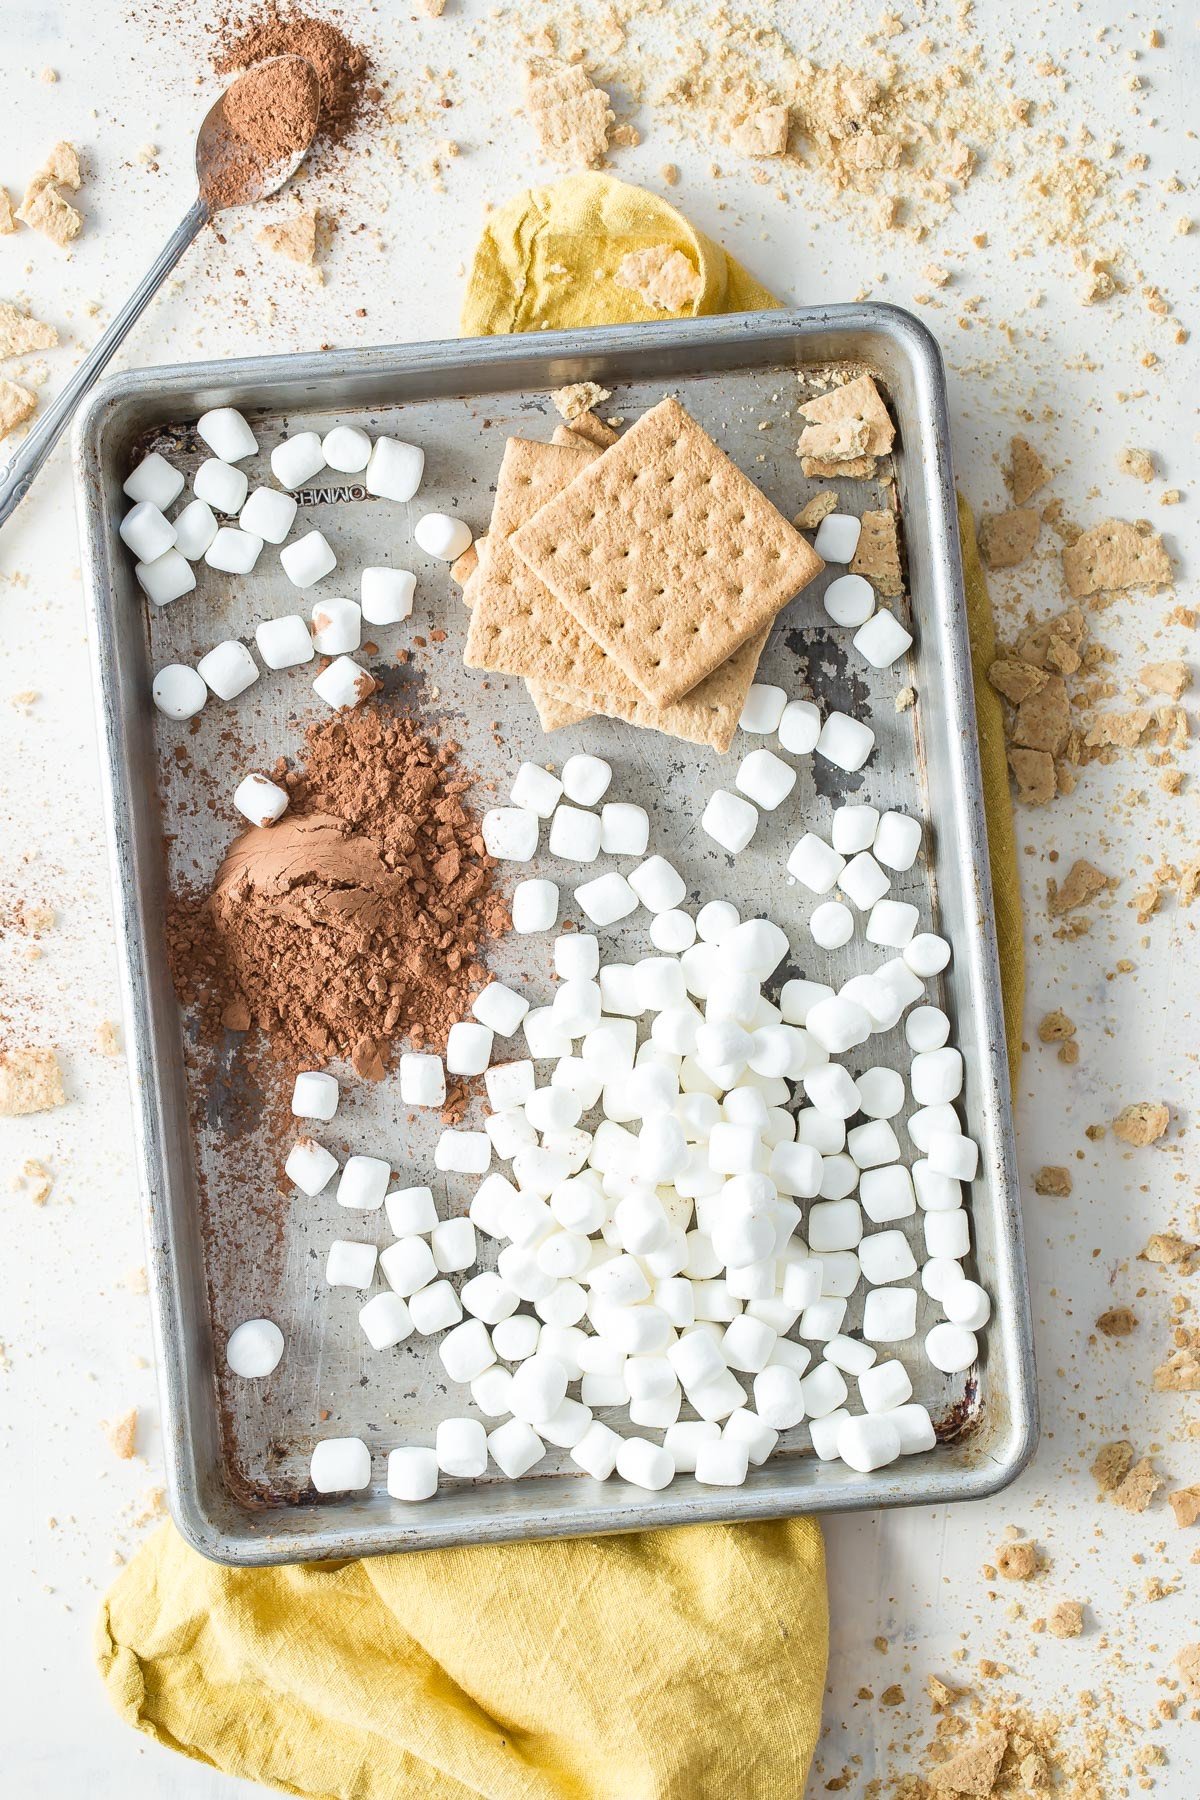 Graham crackers, marshmallows and cocoa powder displayed on baking sheet.